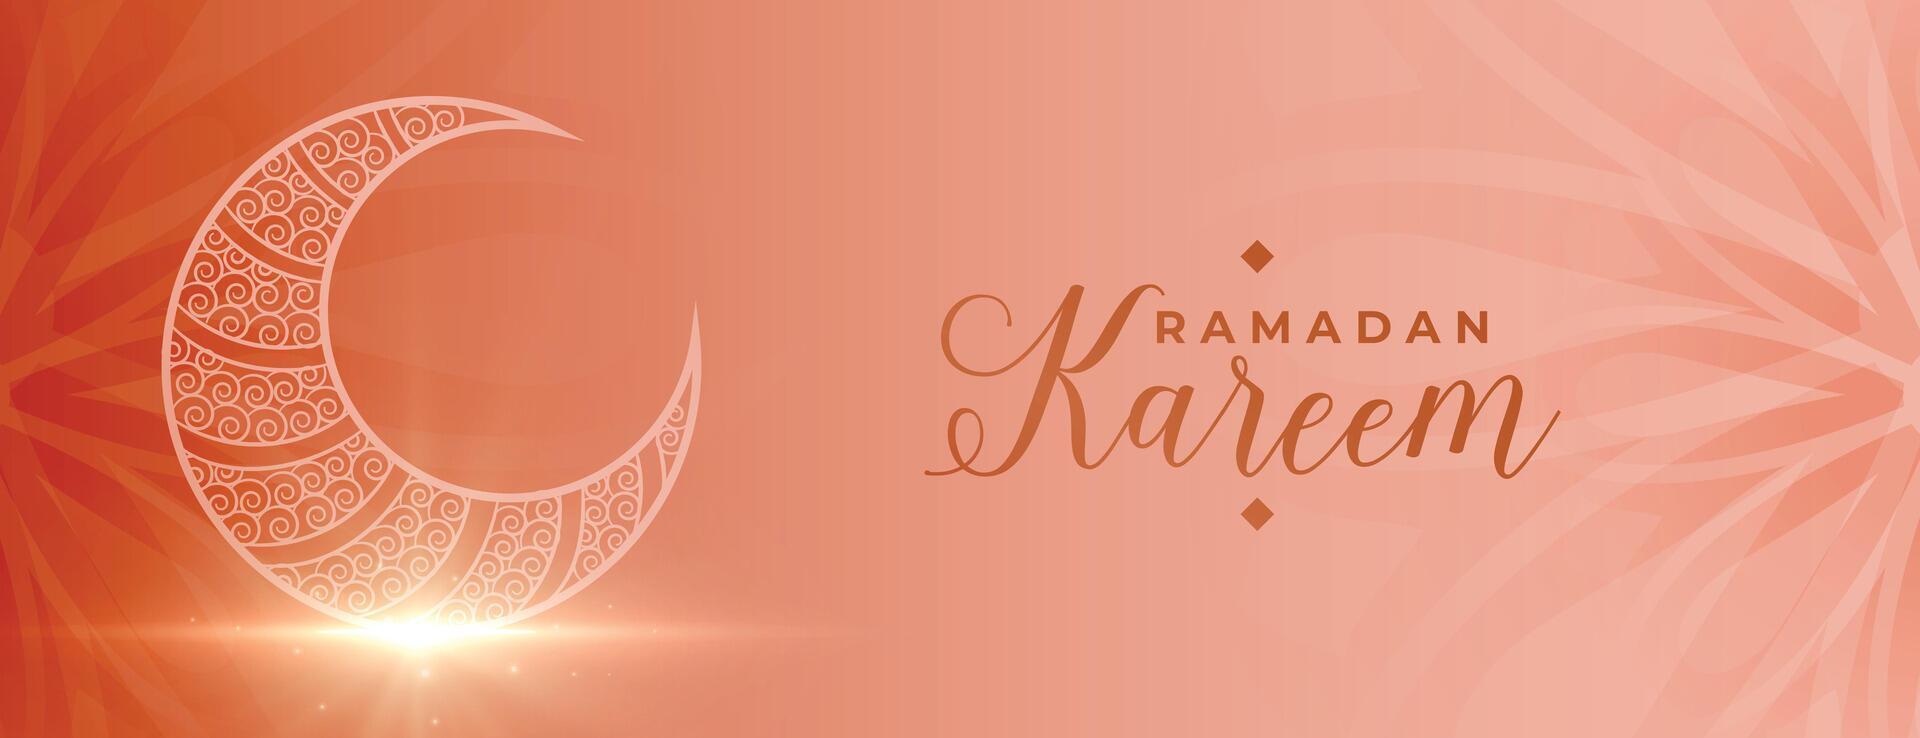 ramadan kareem islamic festival banner with cresent moon vector